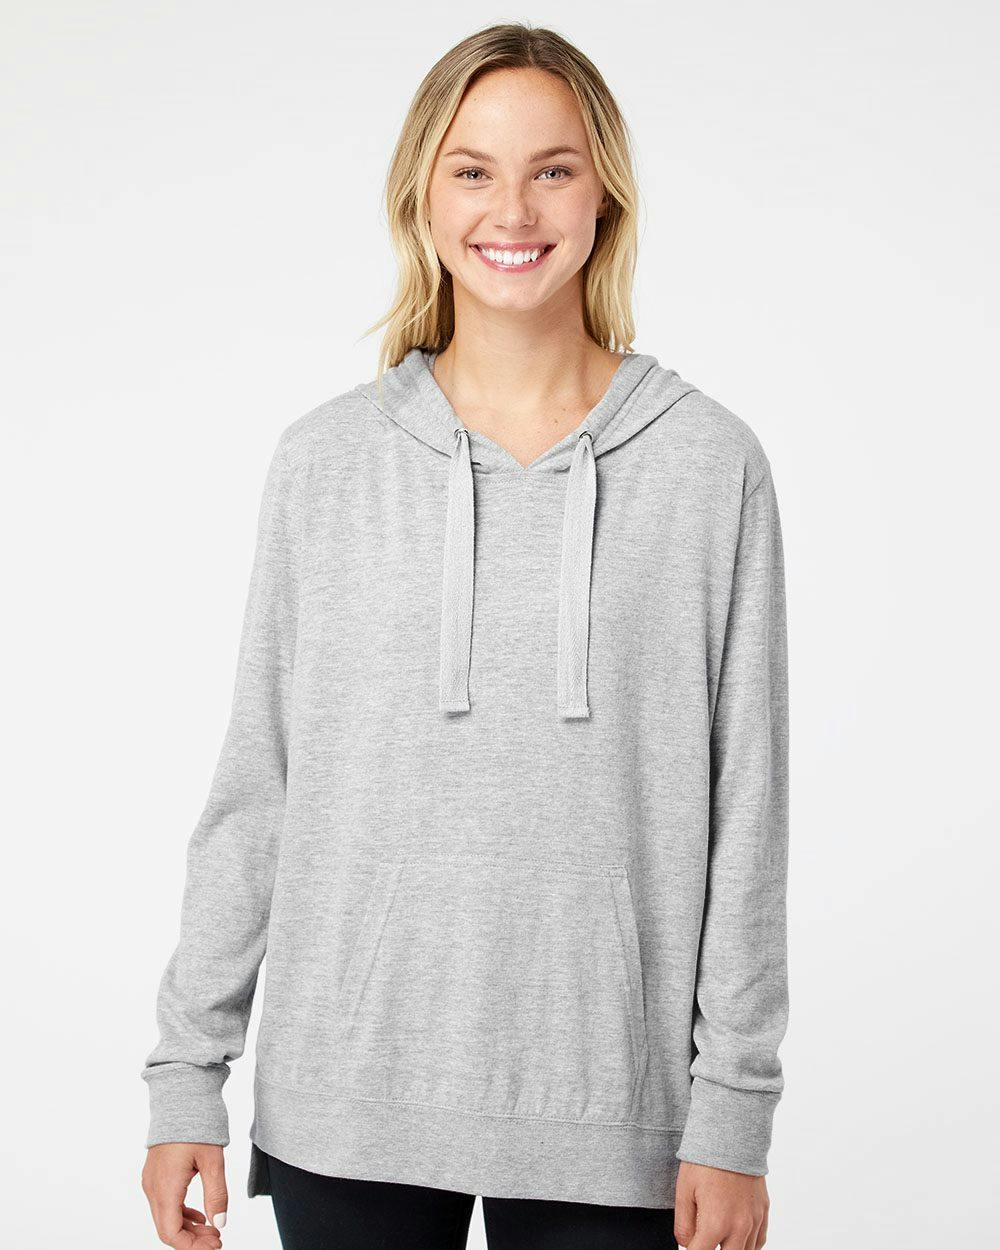 Image for Women's Sueded Jersey Hooded Sweatshirt - W21404